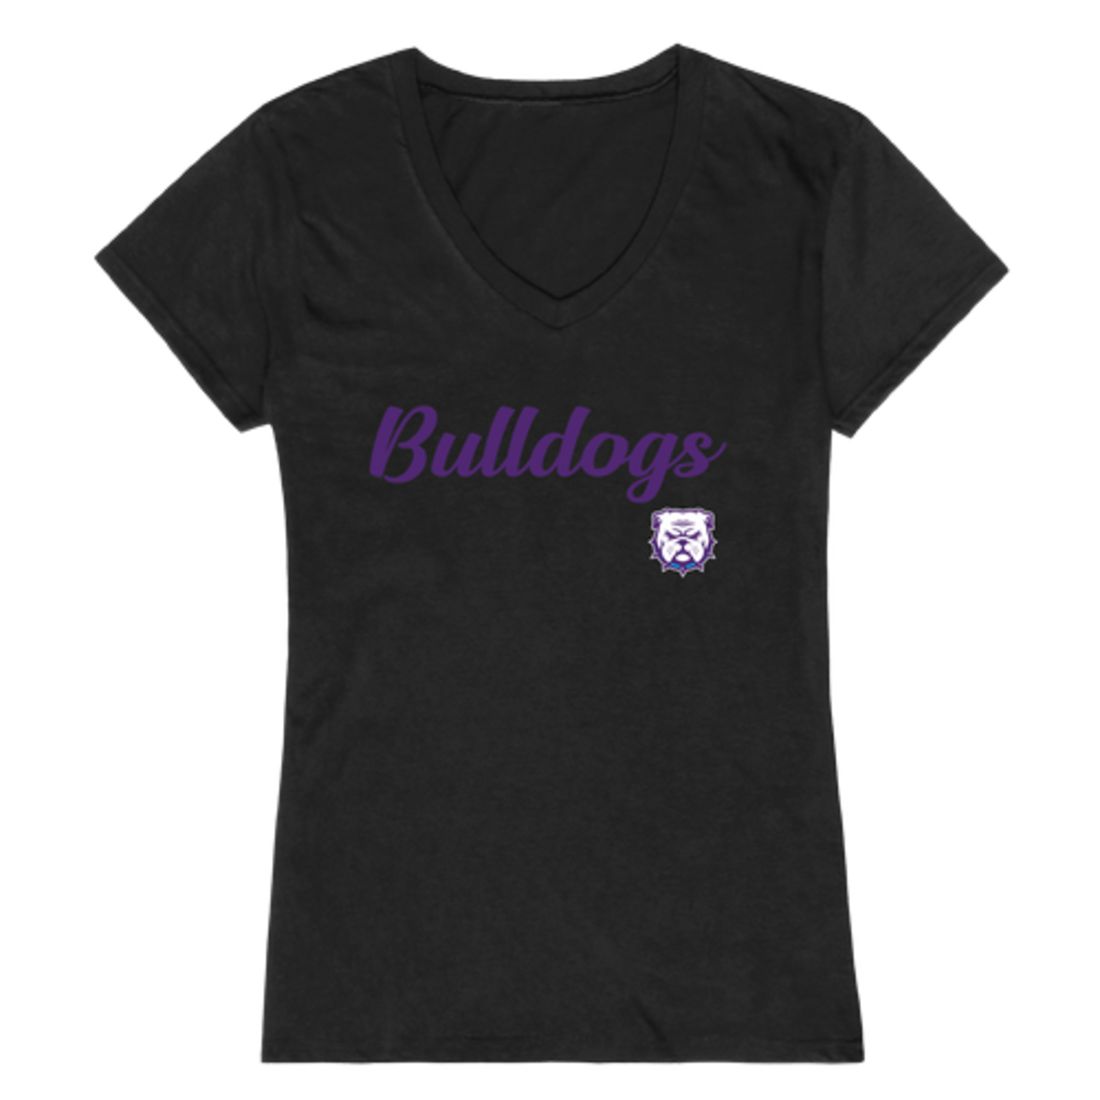 Truman State University Bulldogs Womens Script T-Shirt Tee